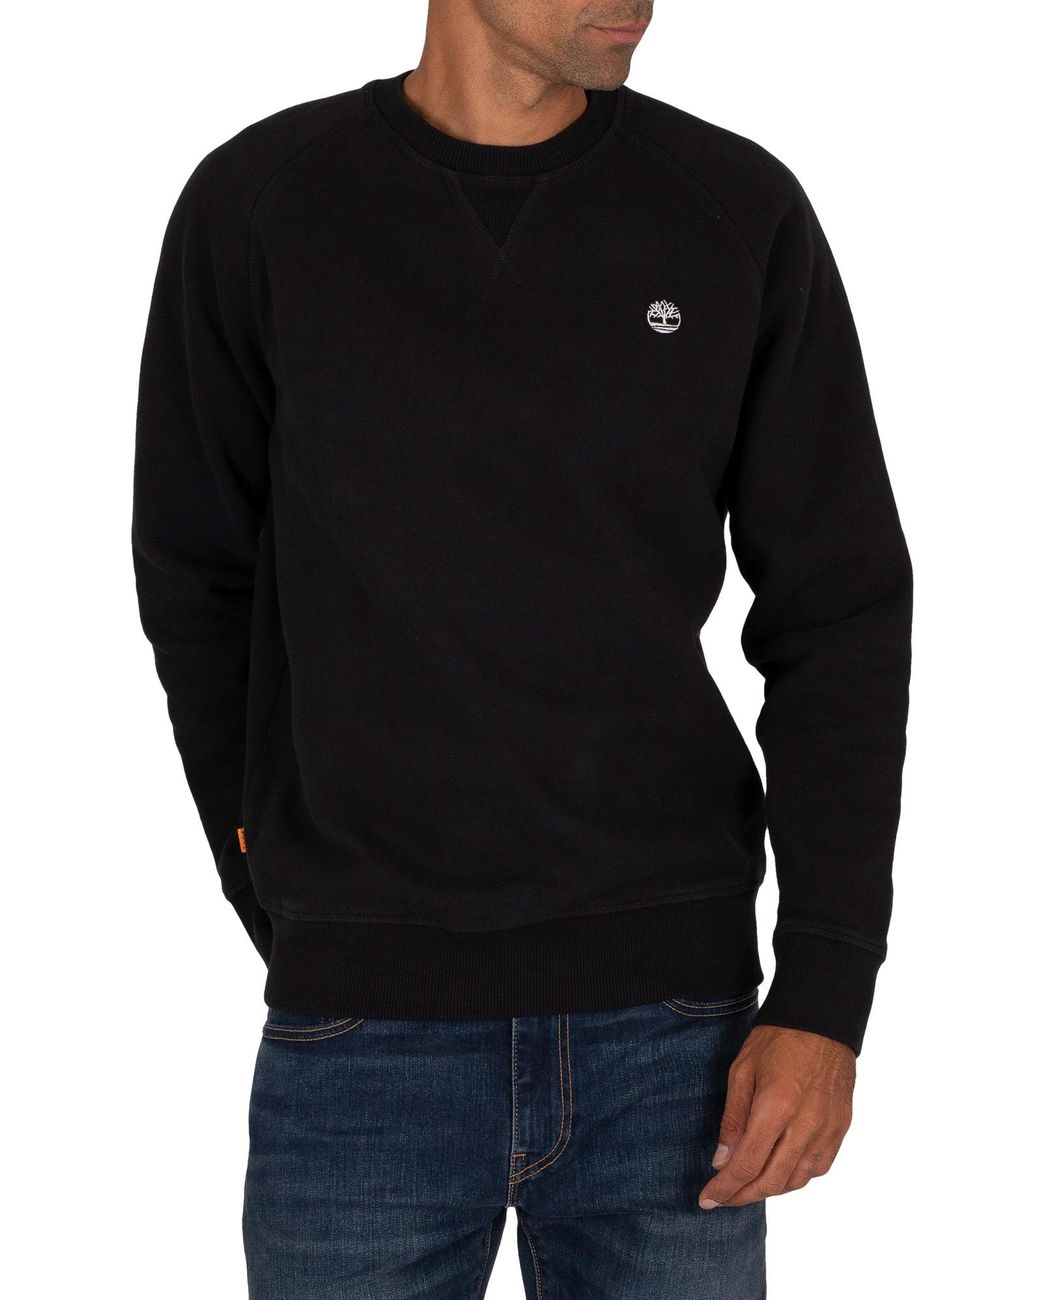 Timberland Basic Crew Sweatshirt in Black for Men - Lyst